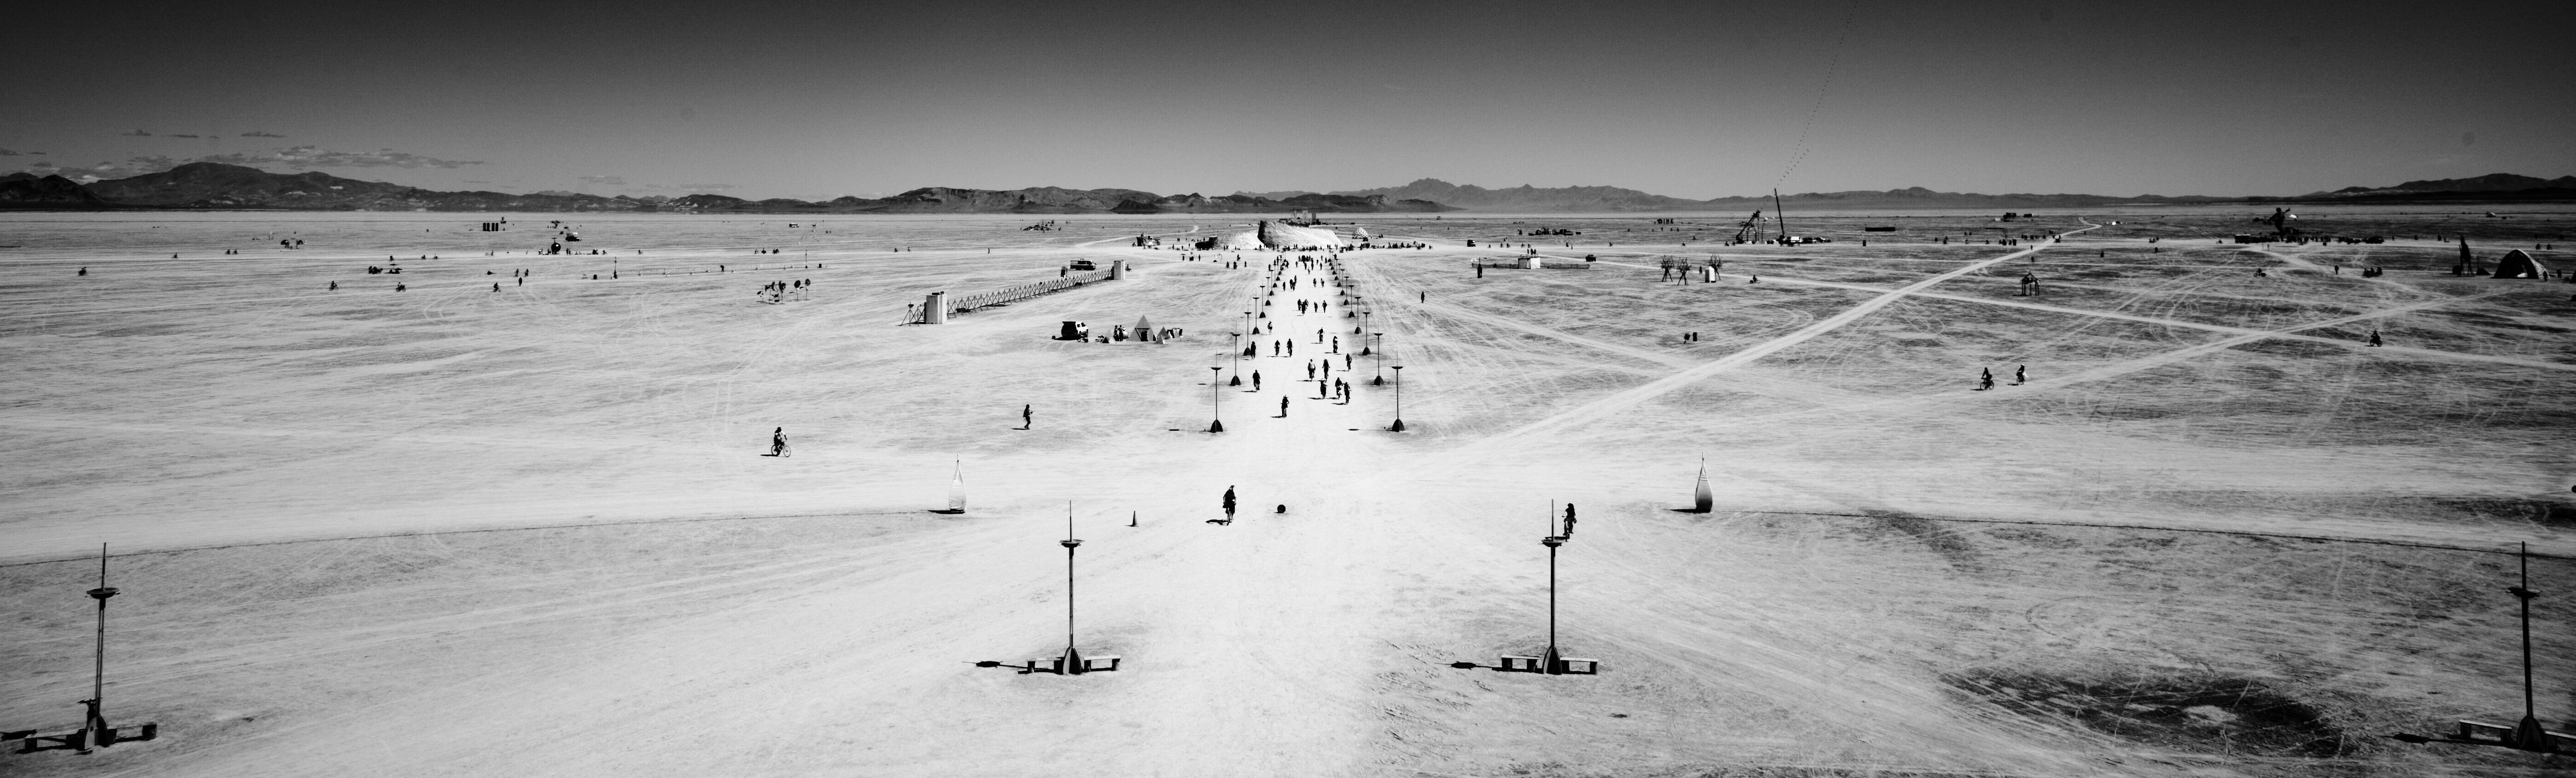 Tao Ruspoli Black and White Photograph - Vanishing Point; Caprarola and Black Rock City (Burning Man)